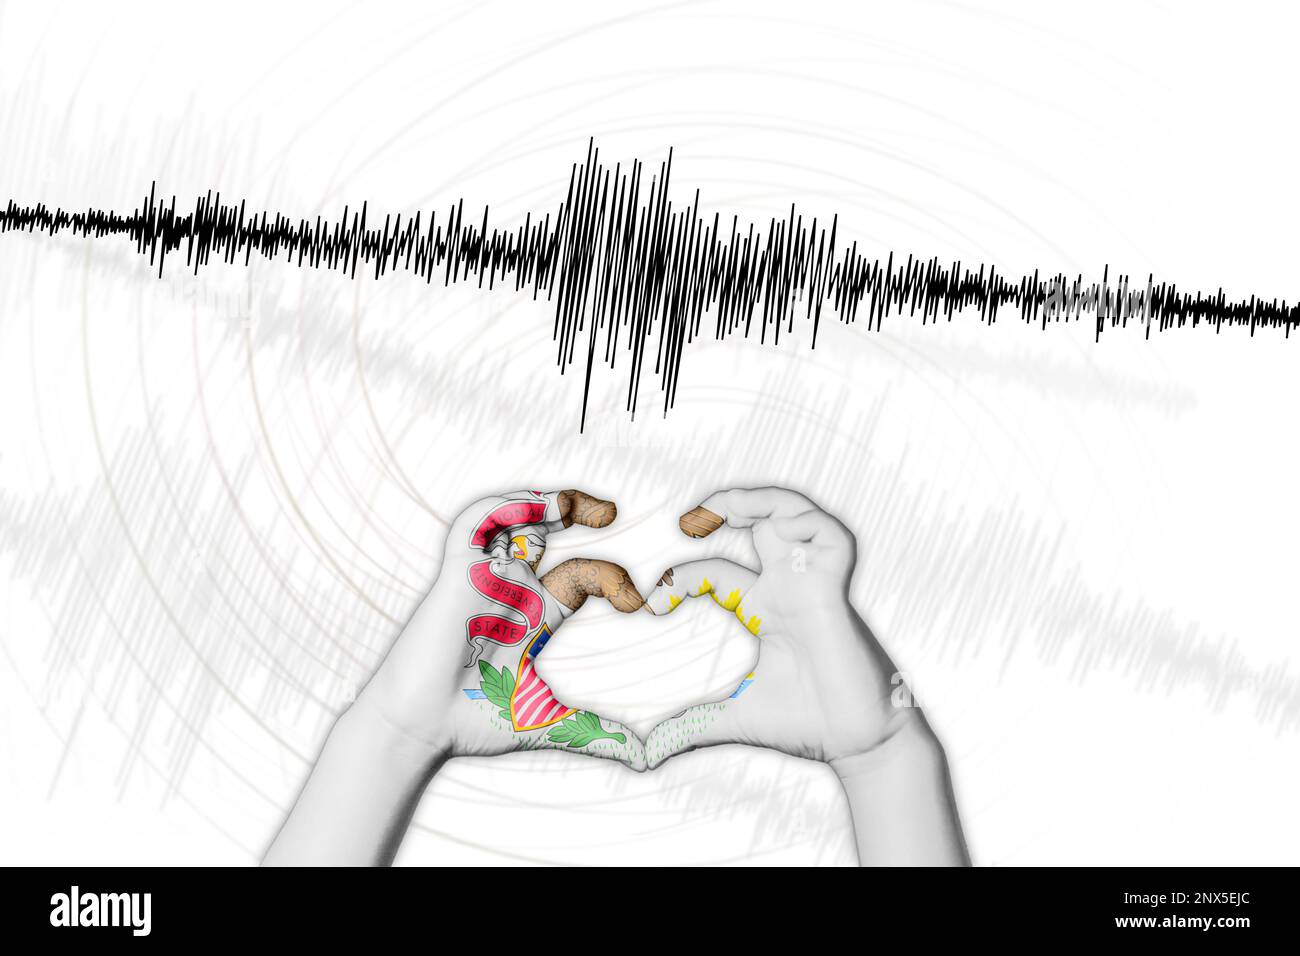 Erdbeben, Illinois Symbol der Heart Richter Scale Stockfoto